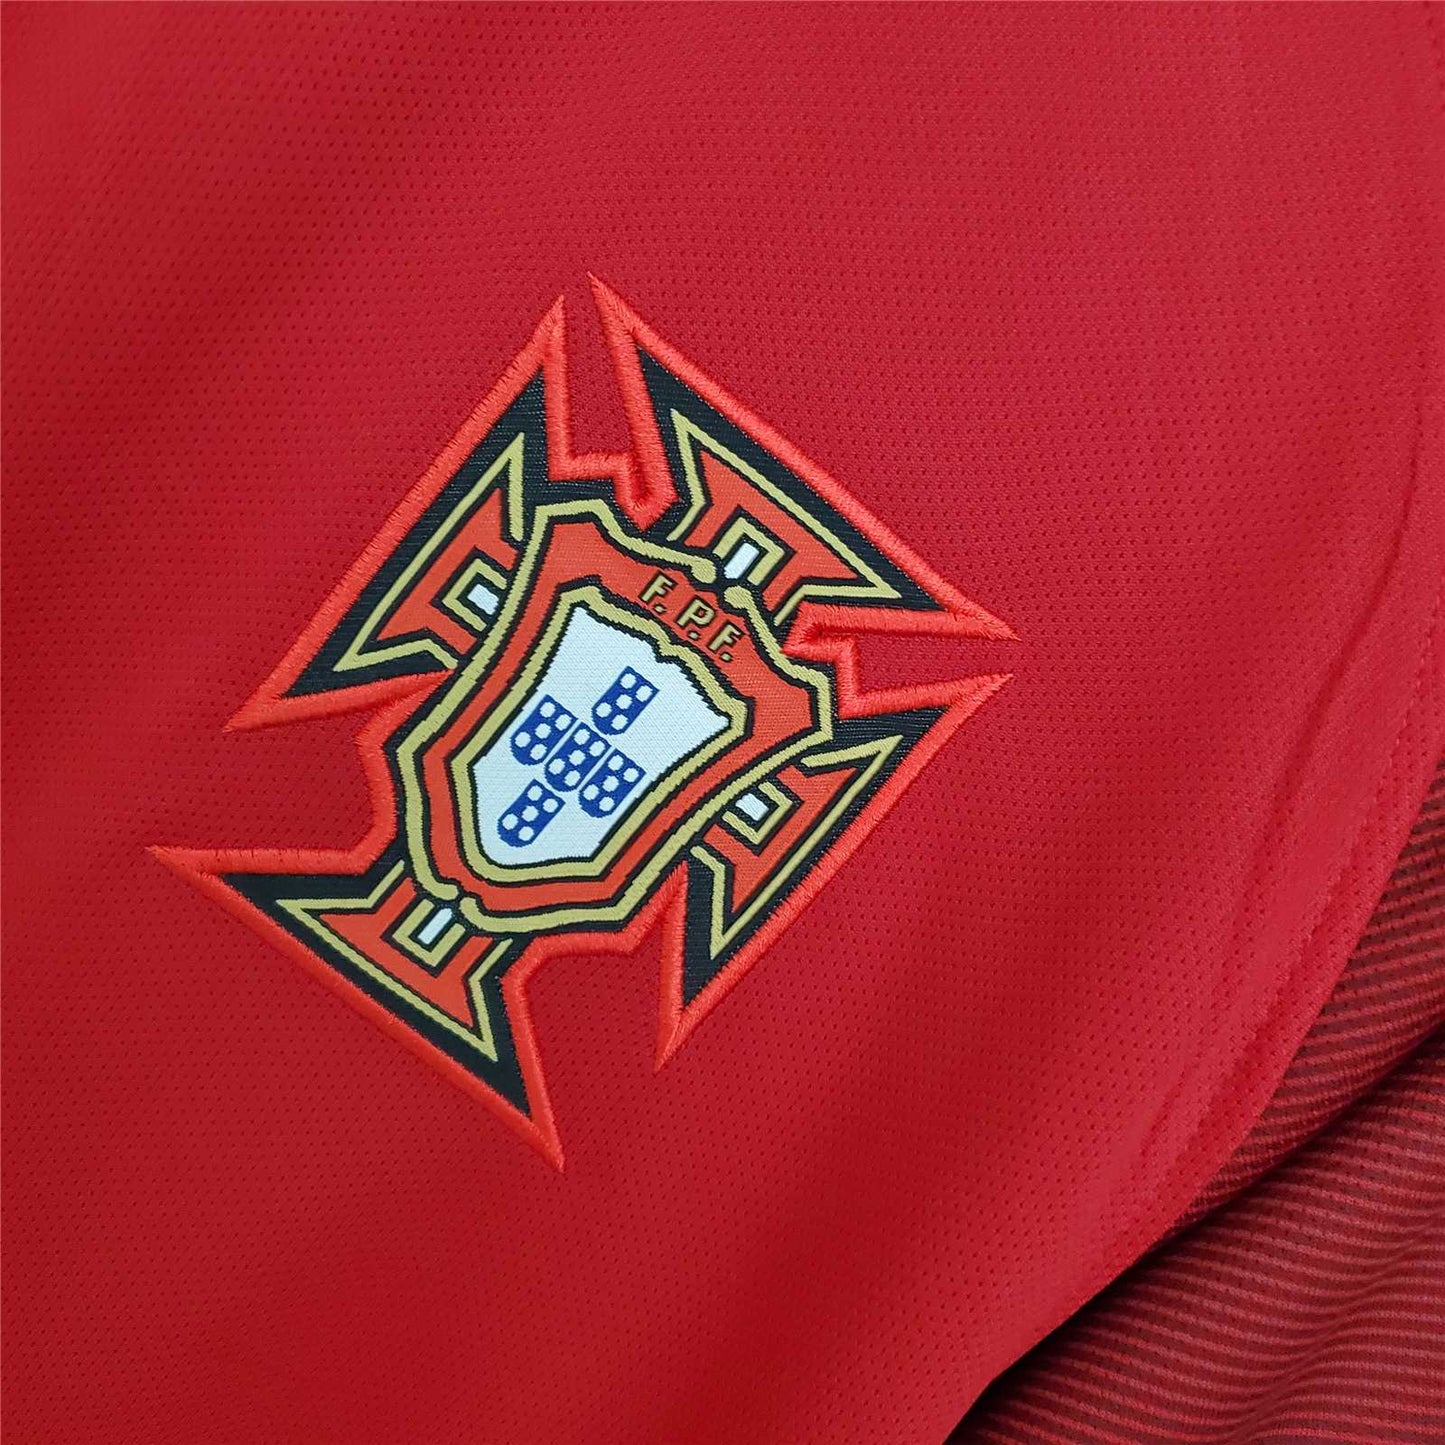 Portugal 2016 Home Shirt